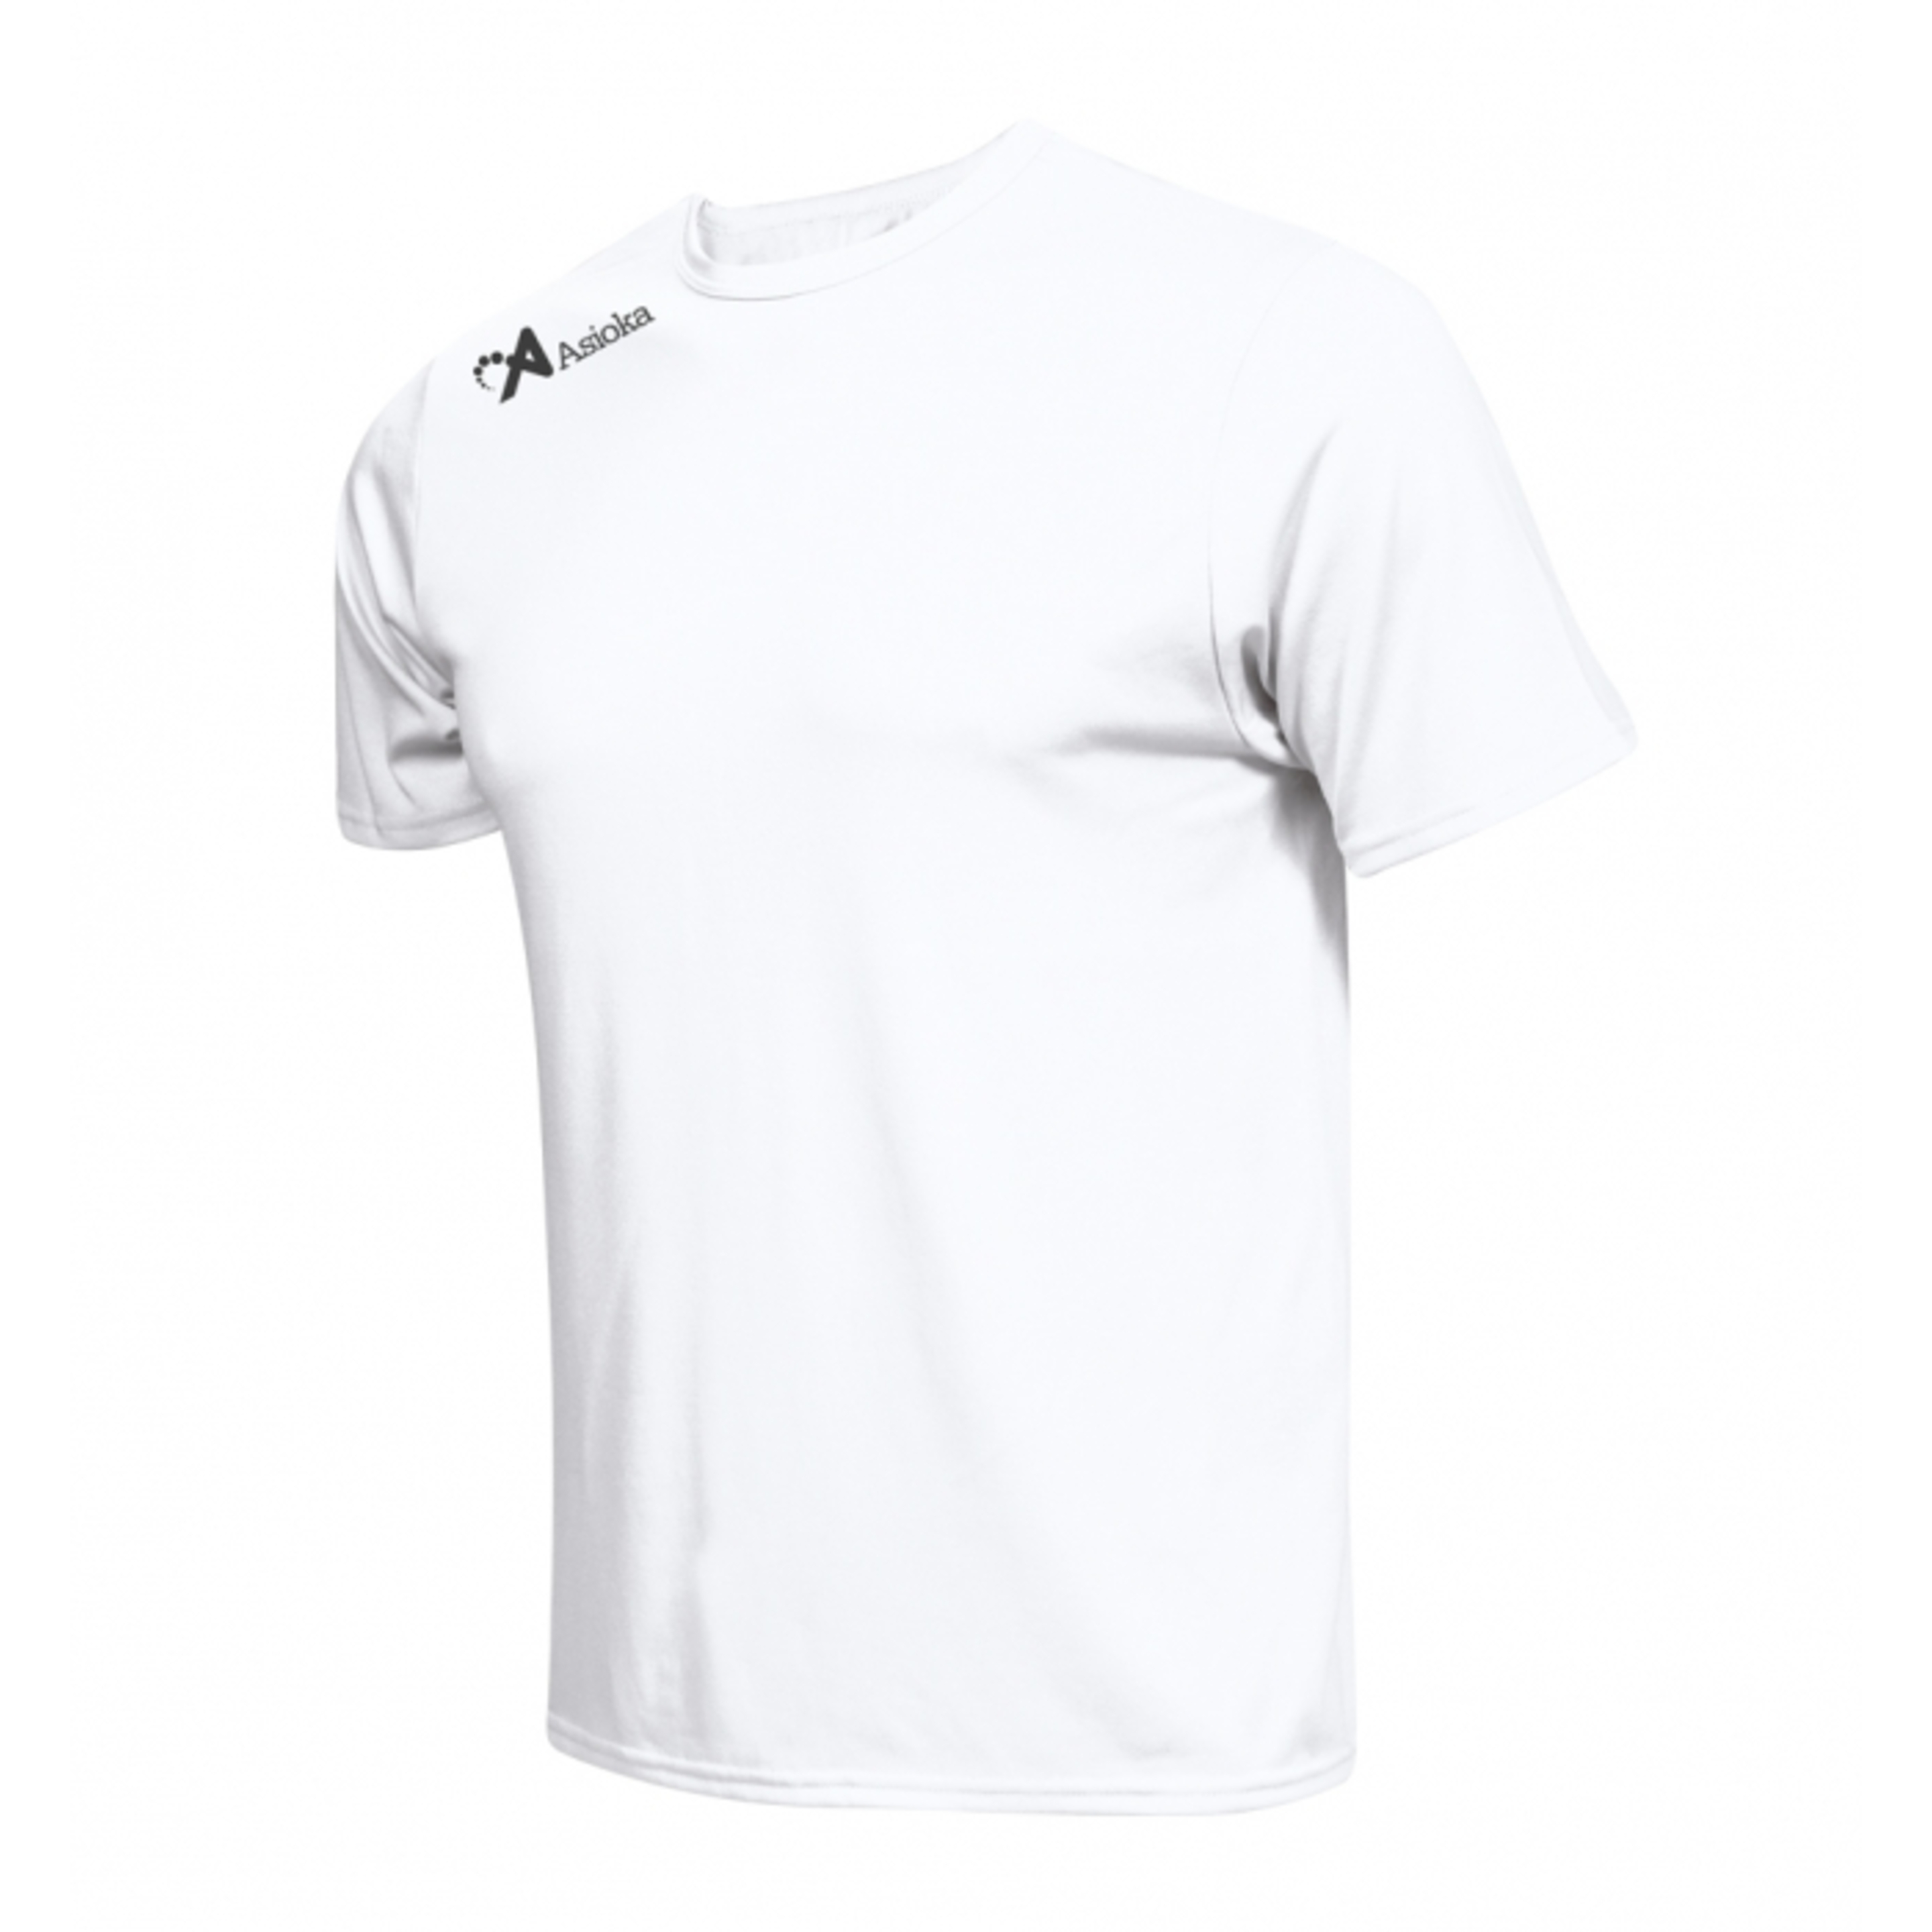 Camiseta Fútbol Asioka Premium - blanco - 